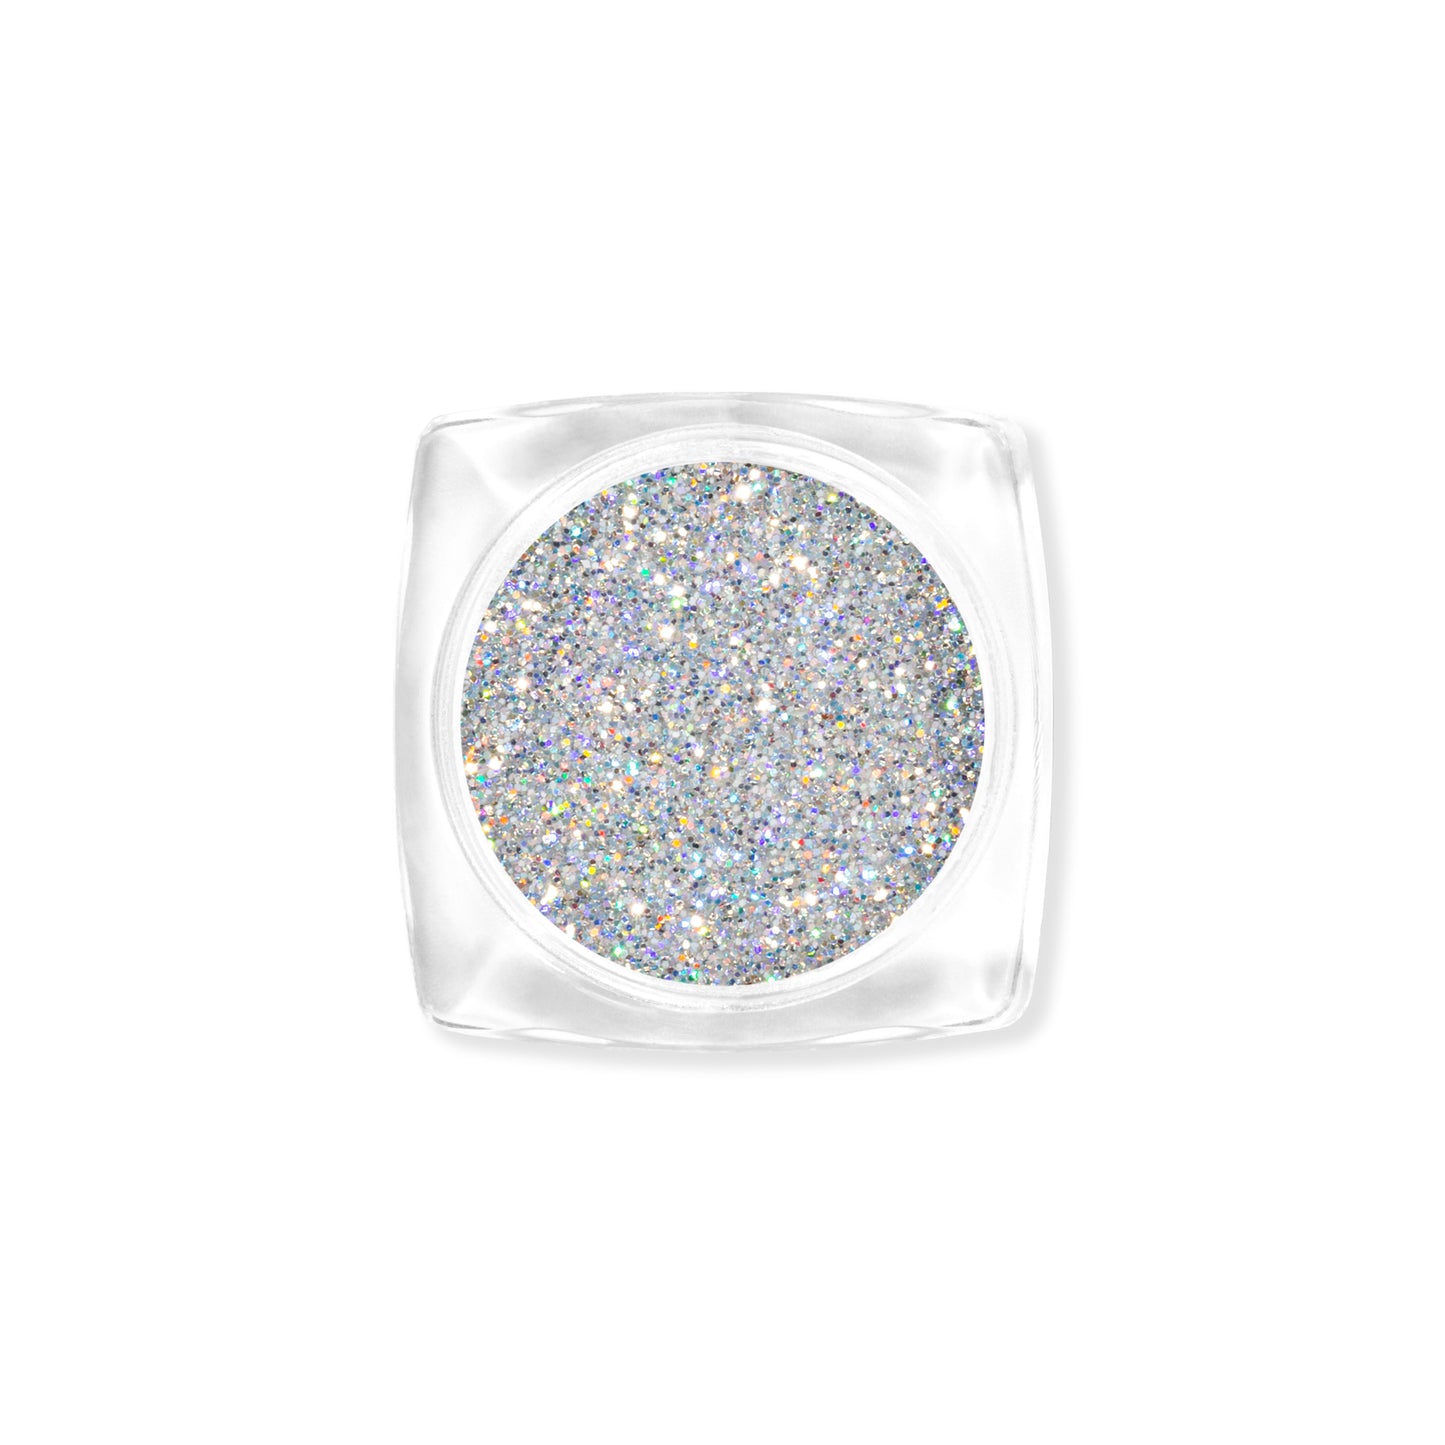 Mesauda MNP - Chrome Powder - Sparkly Glitter